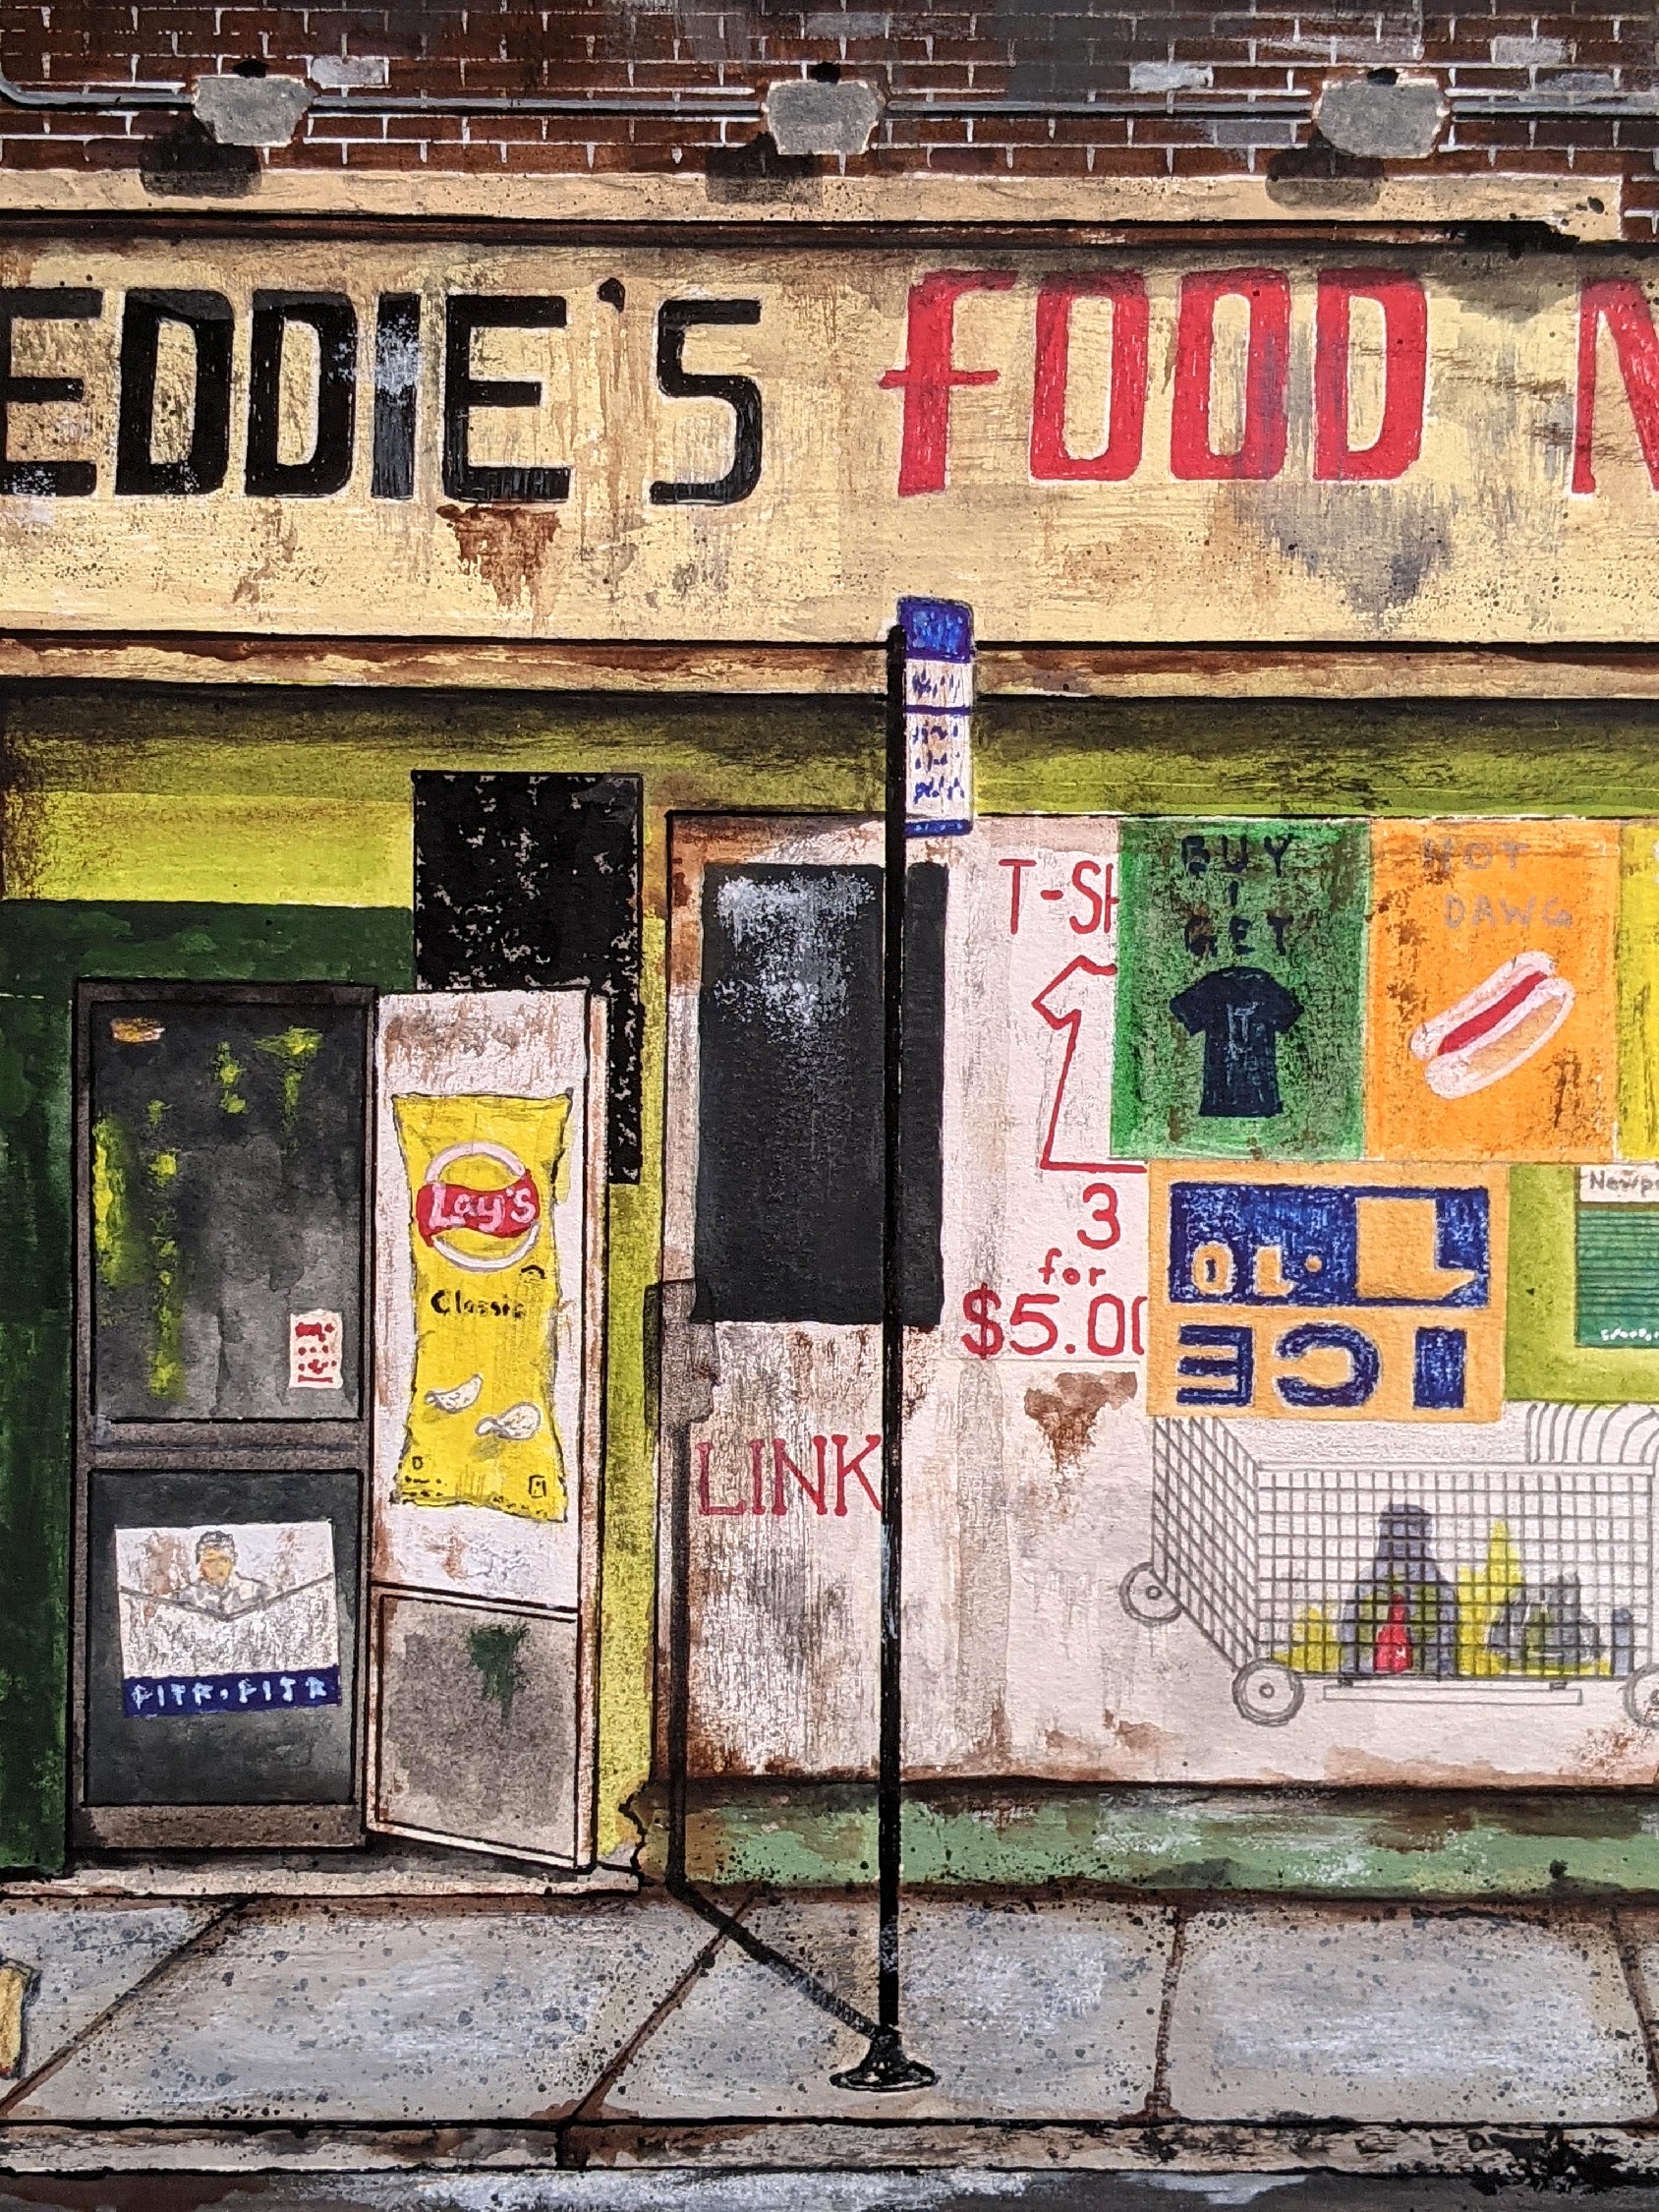 "Eddie's Food Mart" Original by PizzaInTheRain